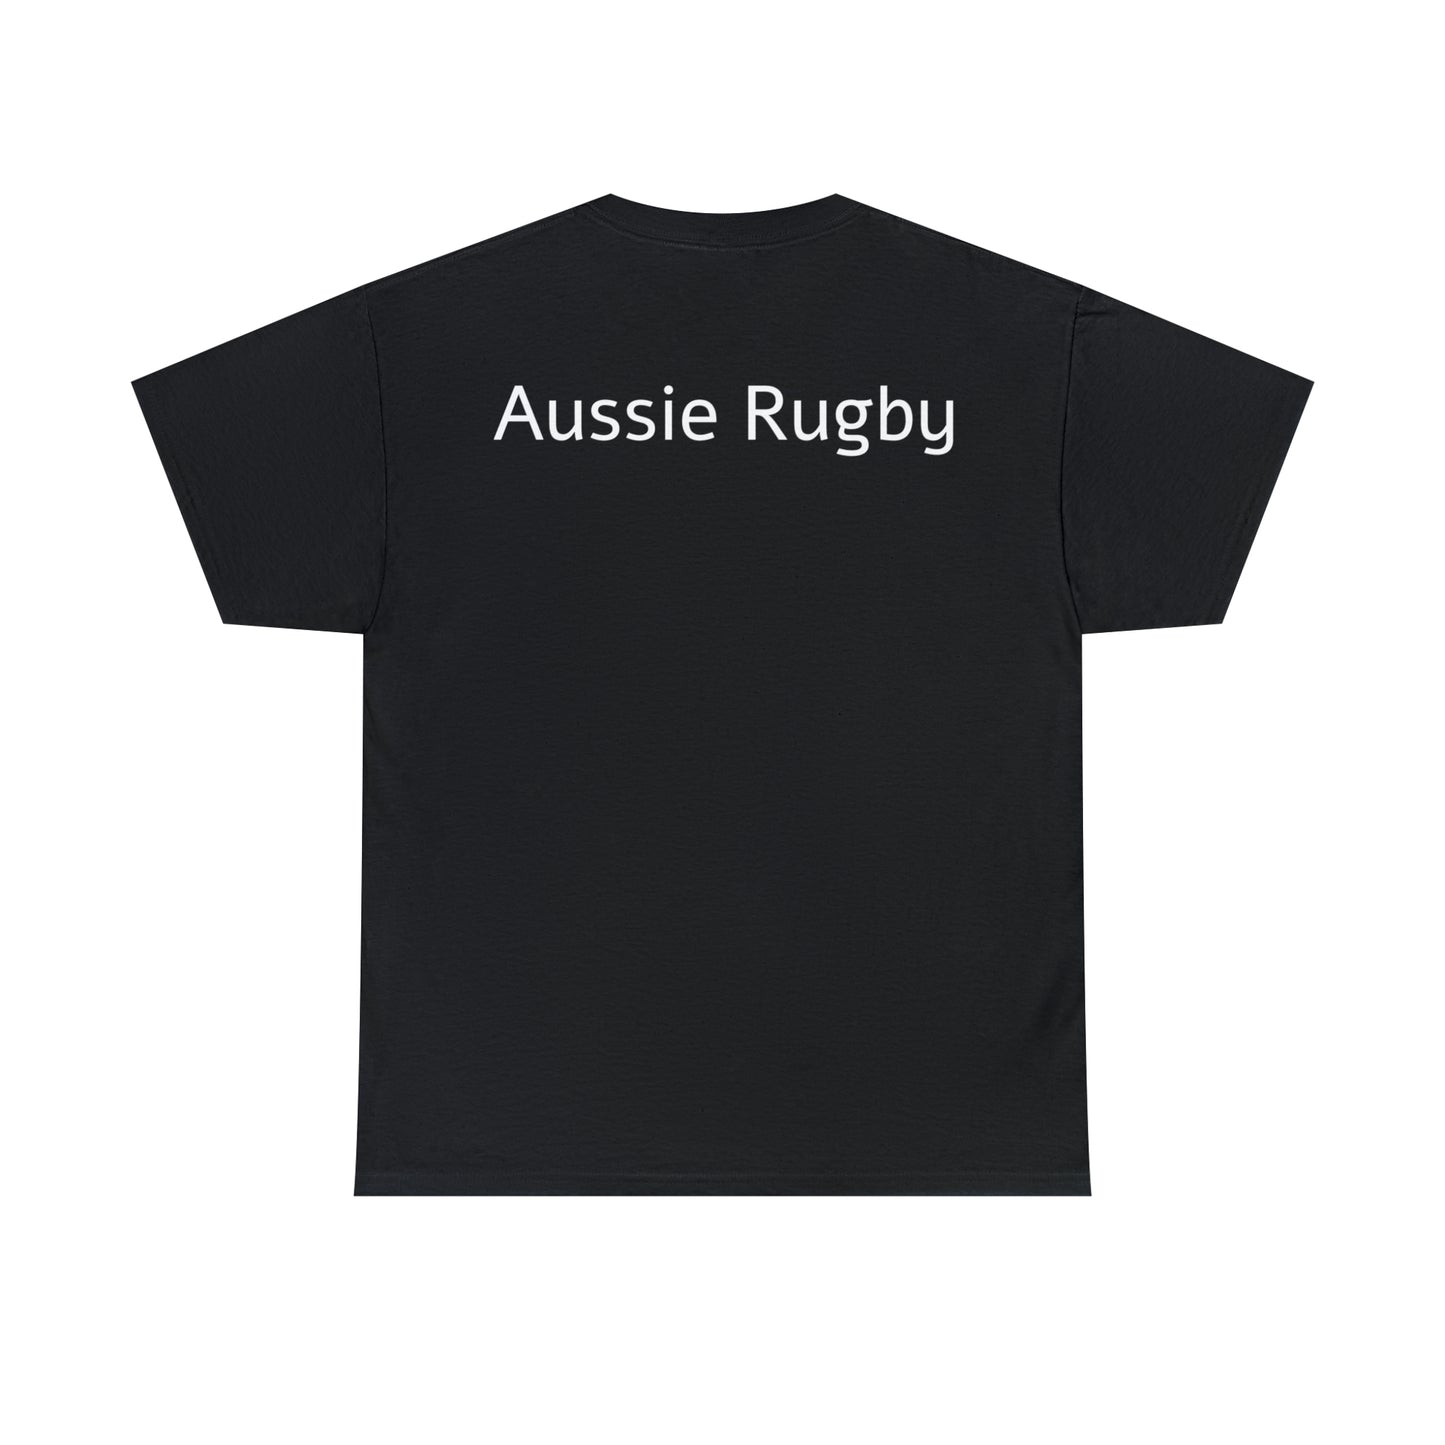 Ready Australia - black shirt